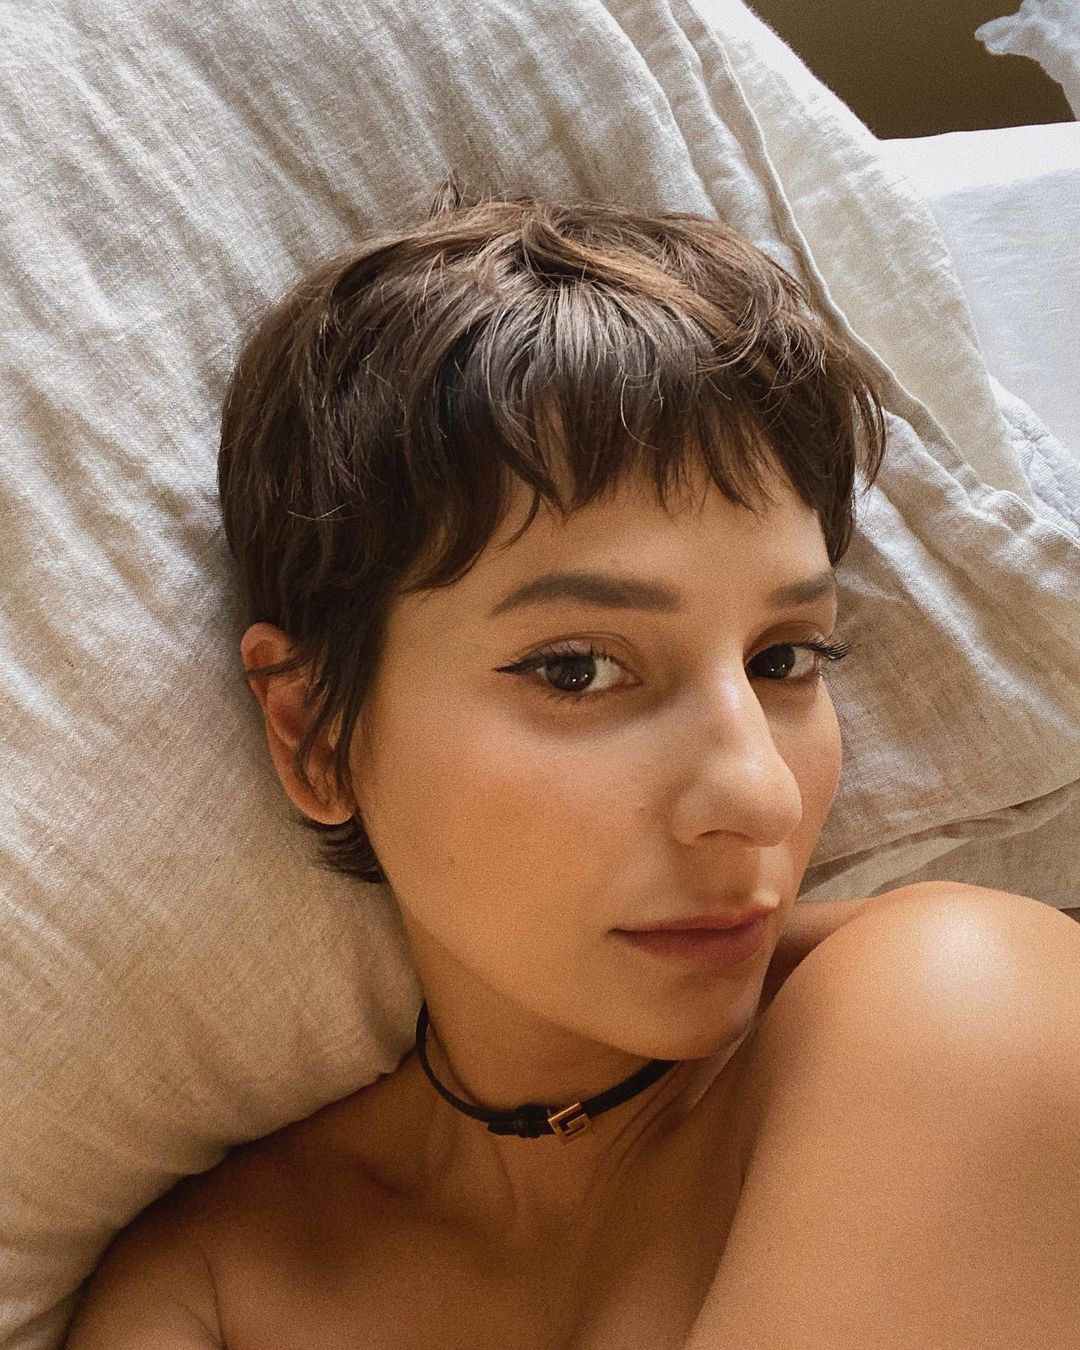 Short hairstyles for women: Alyssa Coscarelli with short hair